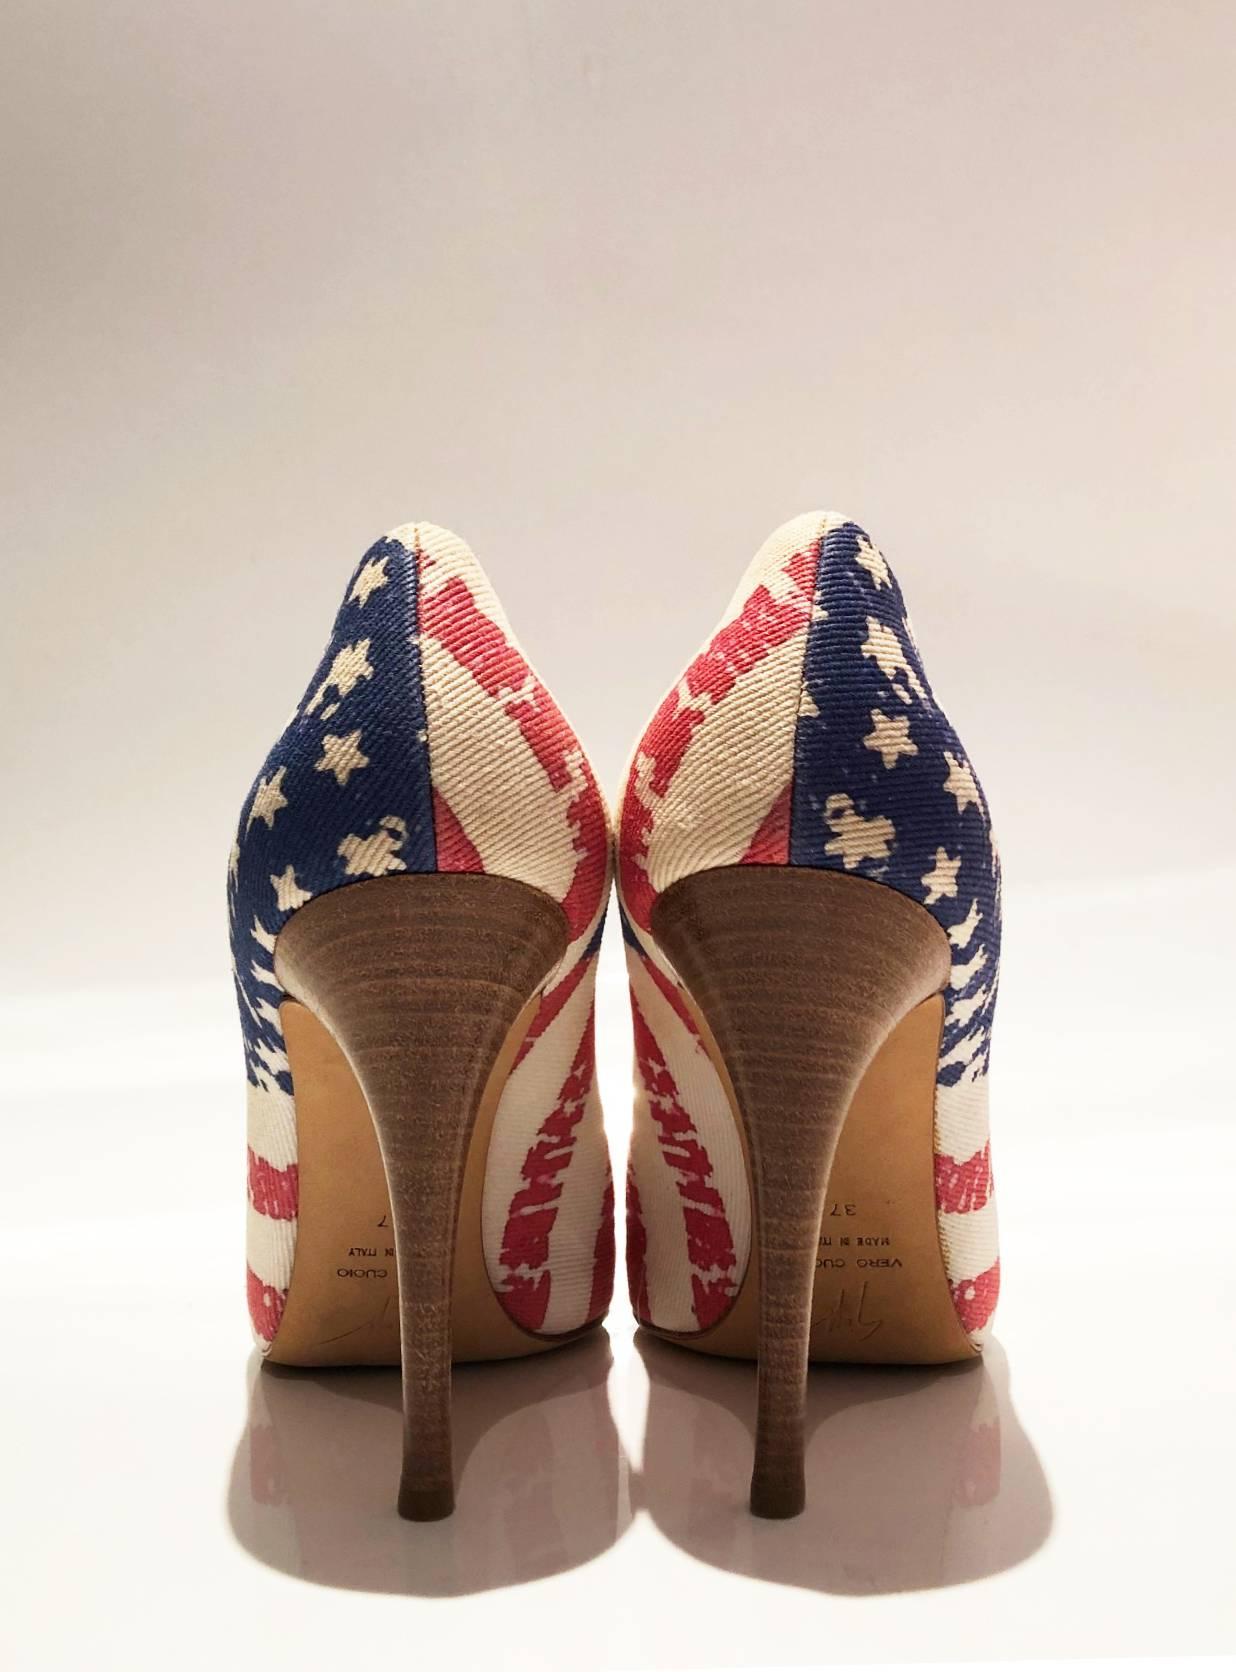 FREE UK and WORLDWIDE DELIVERY 

Giuseppe Zanotti USA flag platform heels pumps, printed cloth, inside platform, wooden heels

Size: 37 Italian / 4 UK / 7 USA
Platform height: 1.5 cm 
Heel height: 11 cm 
Condition: 2000s, very good, never worn, just